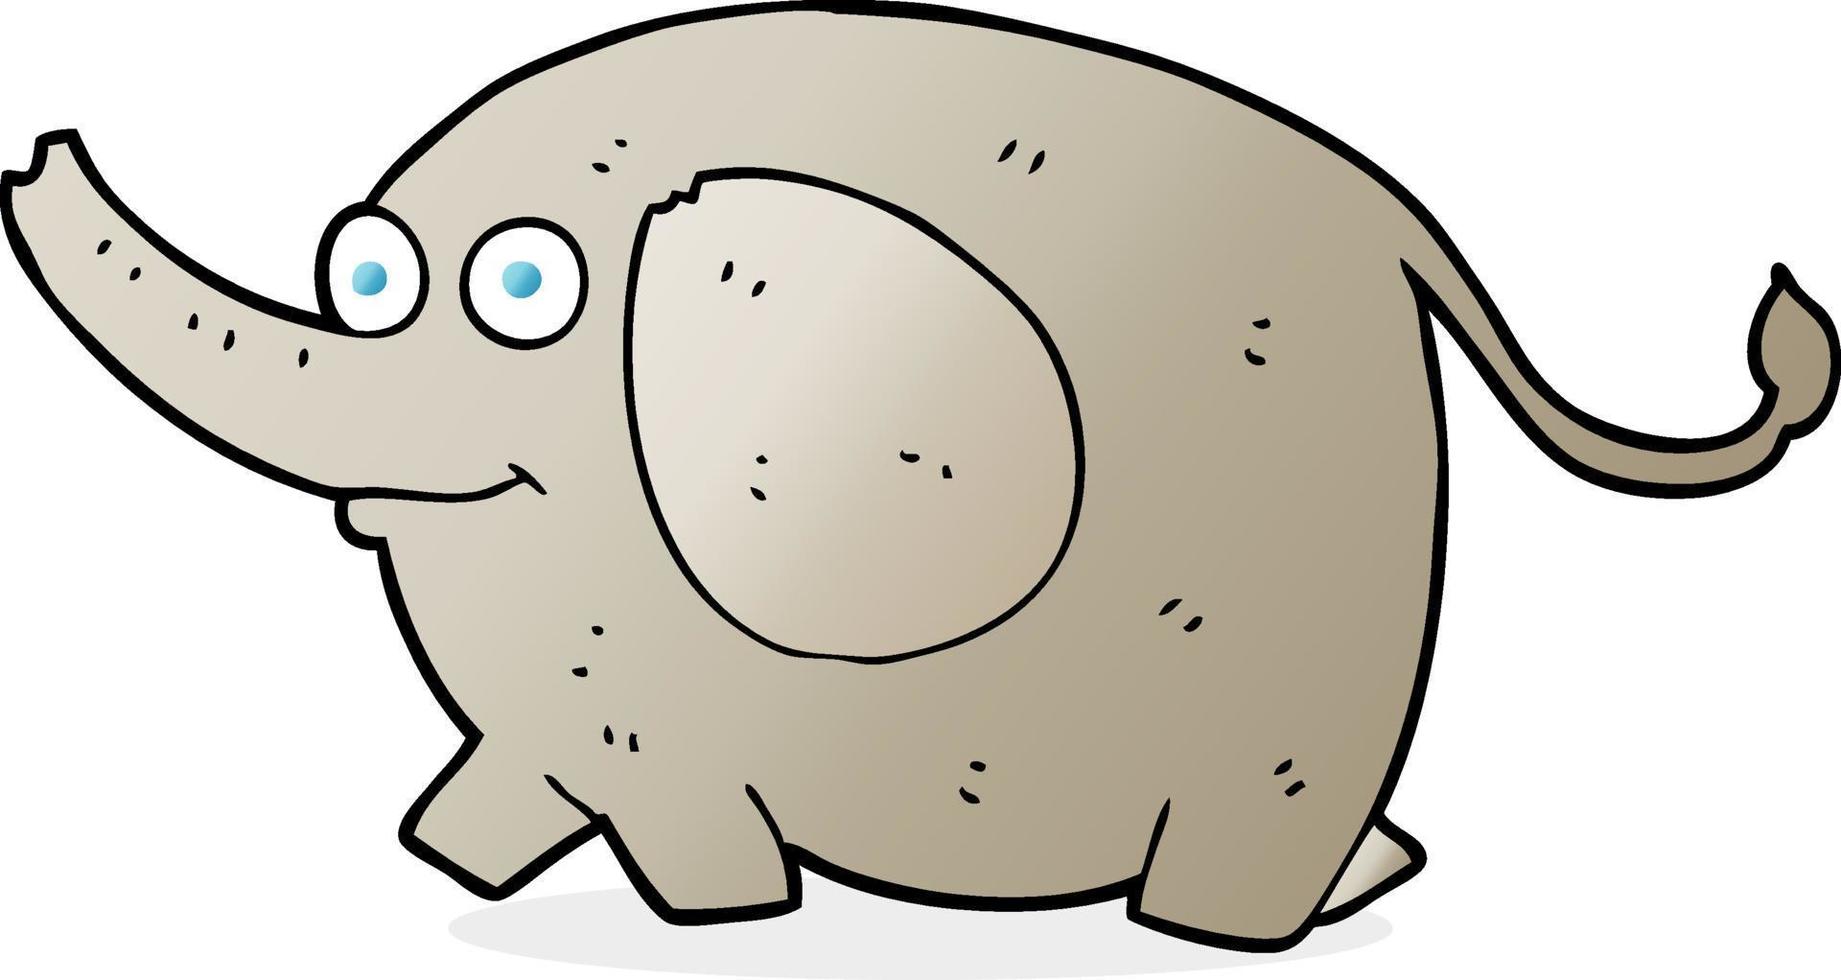 doodle character cartoon elephant vector